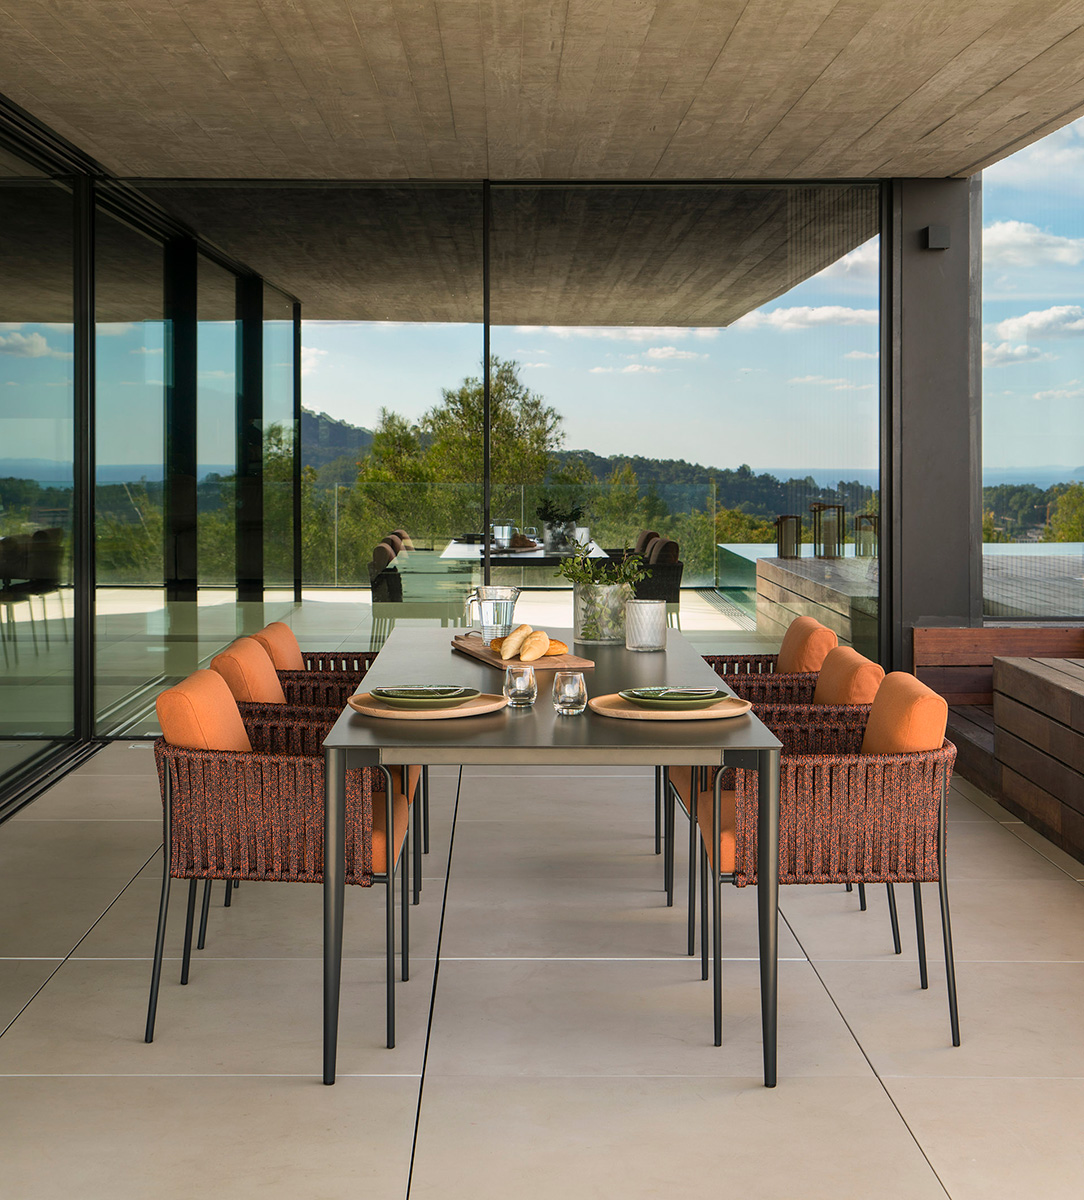 projekte - outdoor projekte - residencial - villa boscana, architektonische faszination auf mallorca